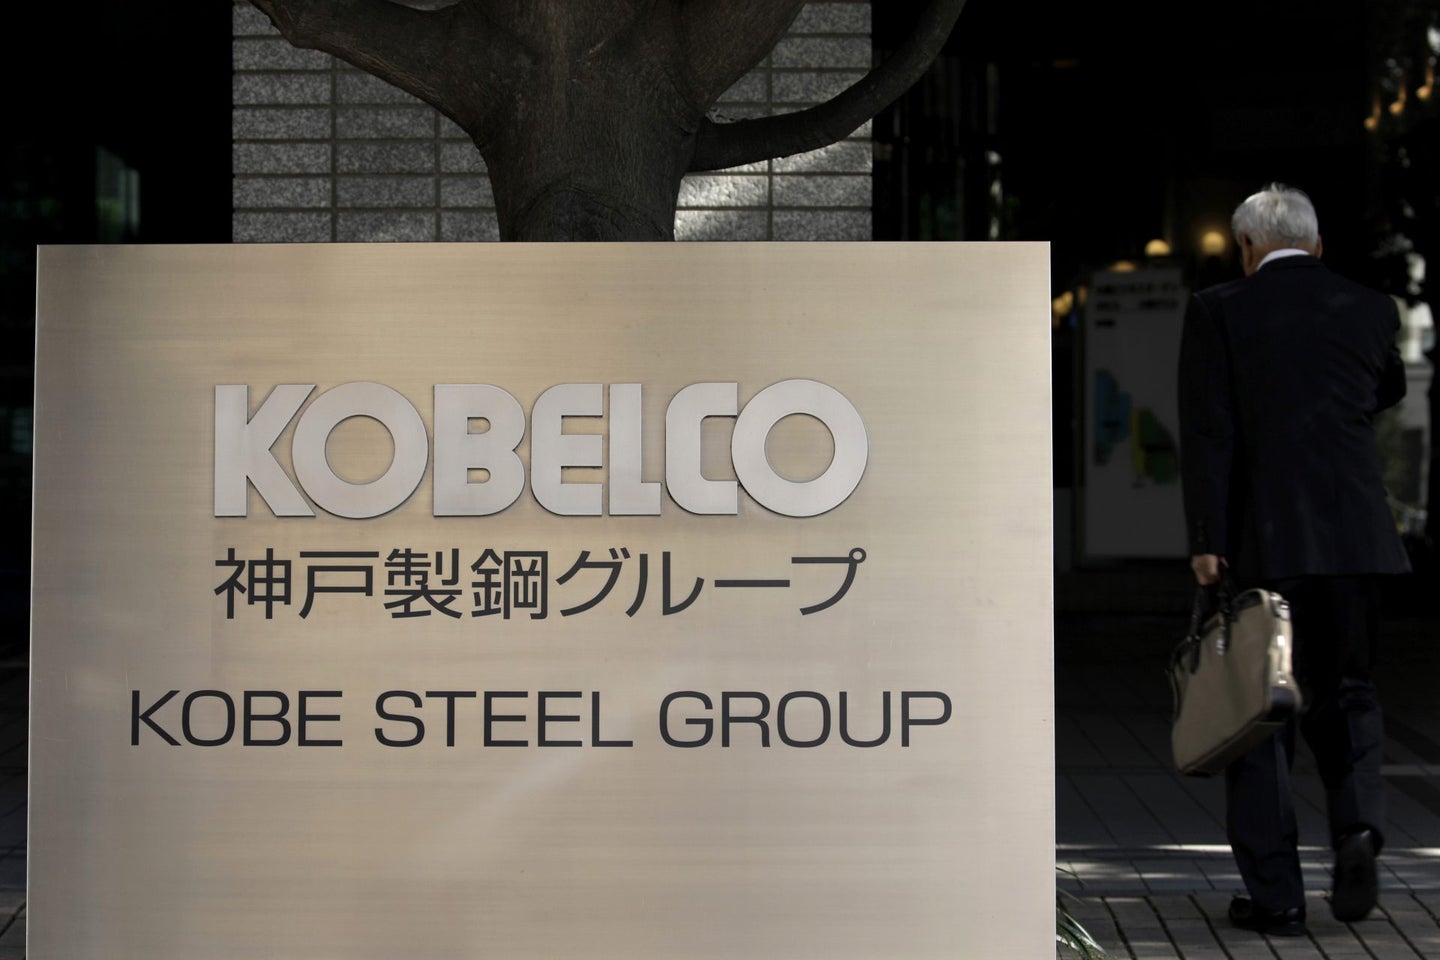 Toyota Gives Itself Worldwide ‘All Clear’ Over Kobe Steel Fiasco